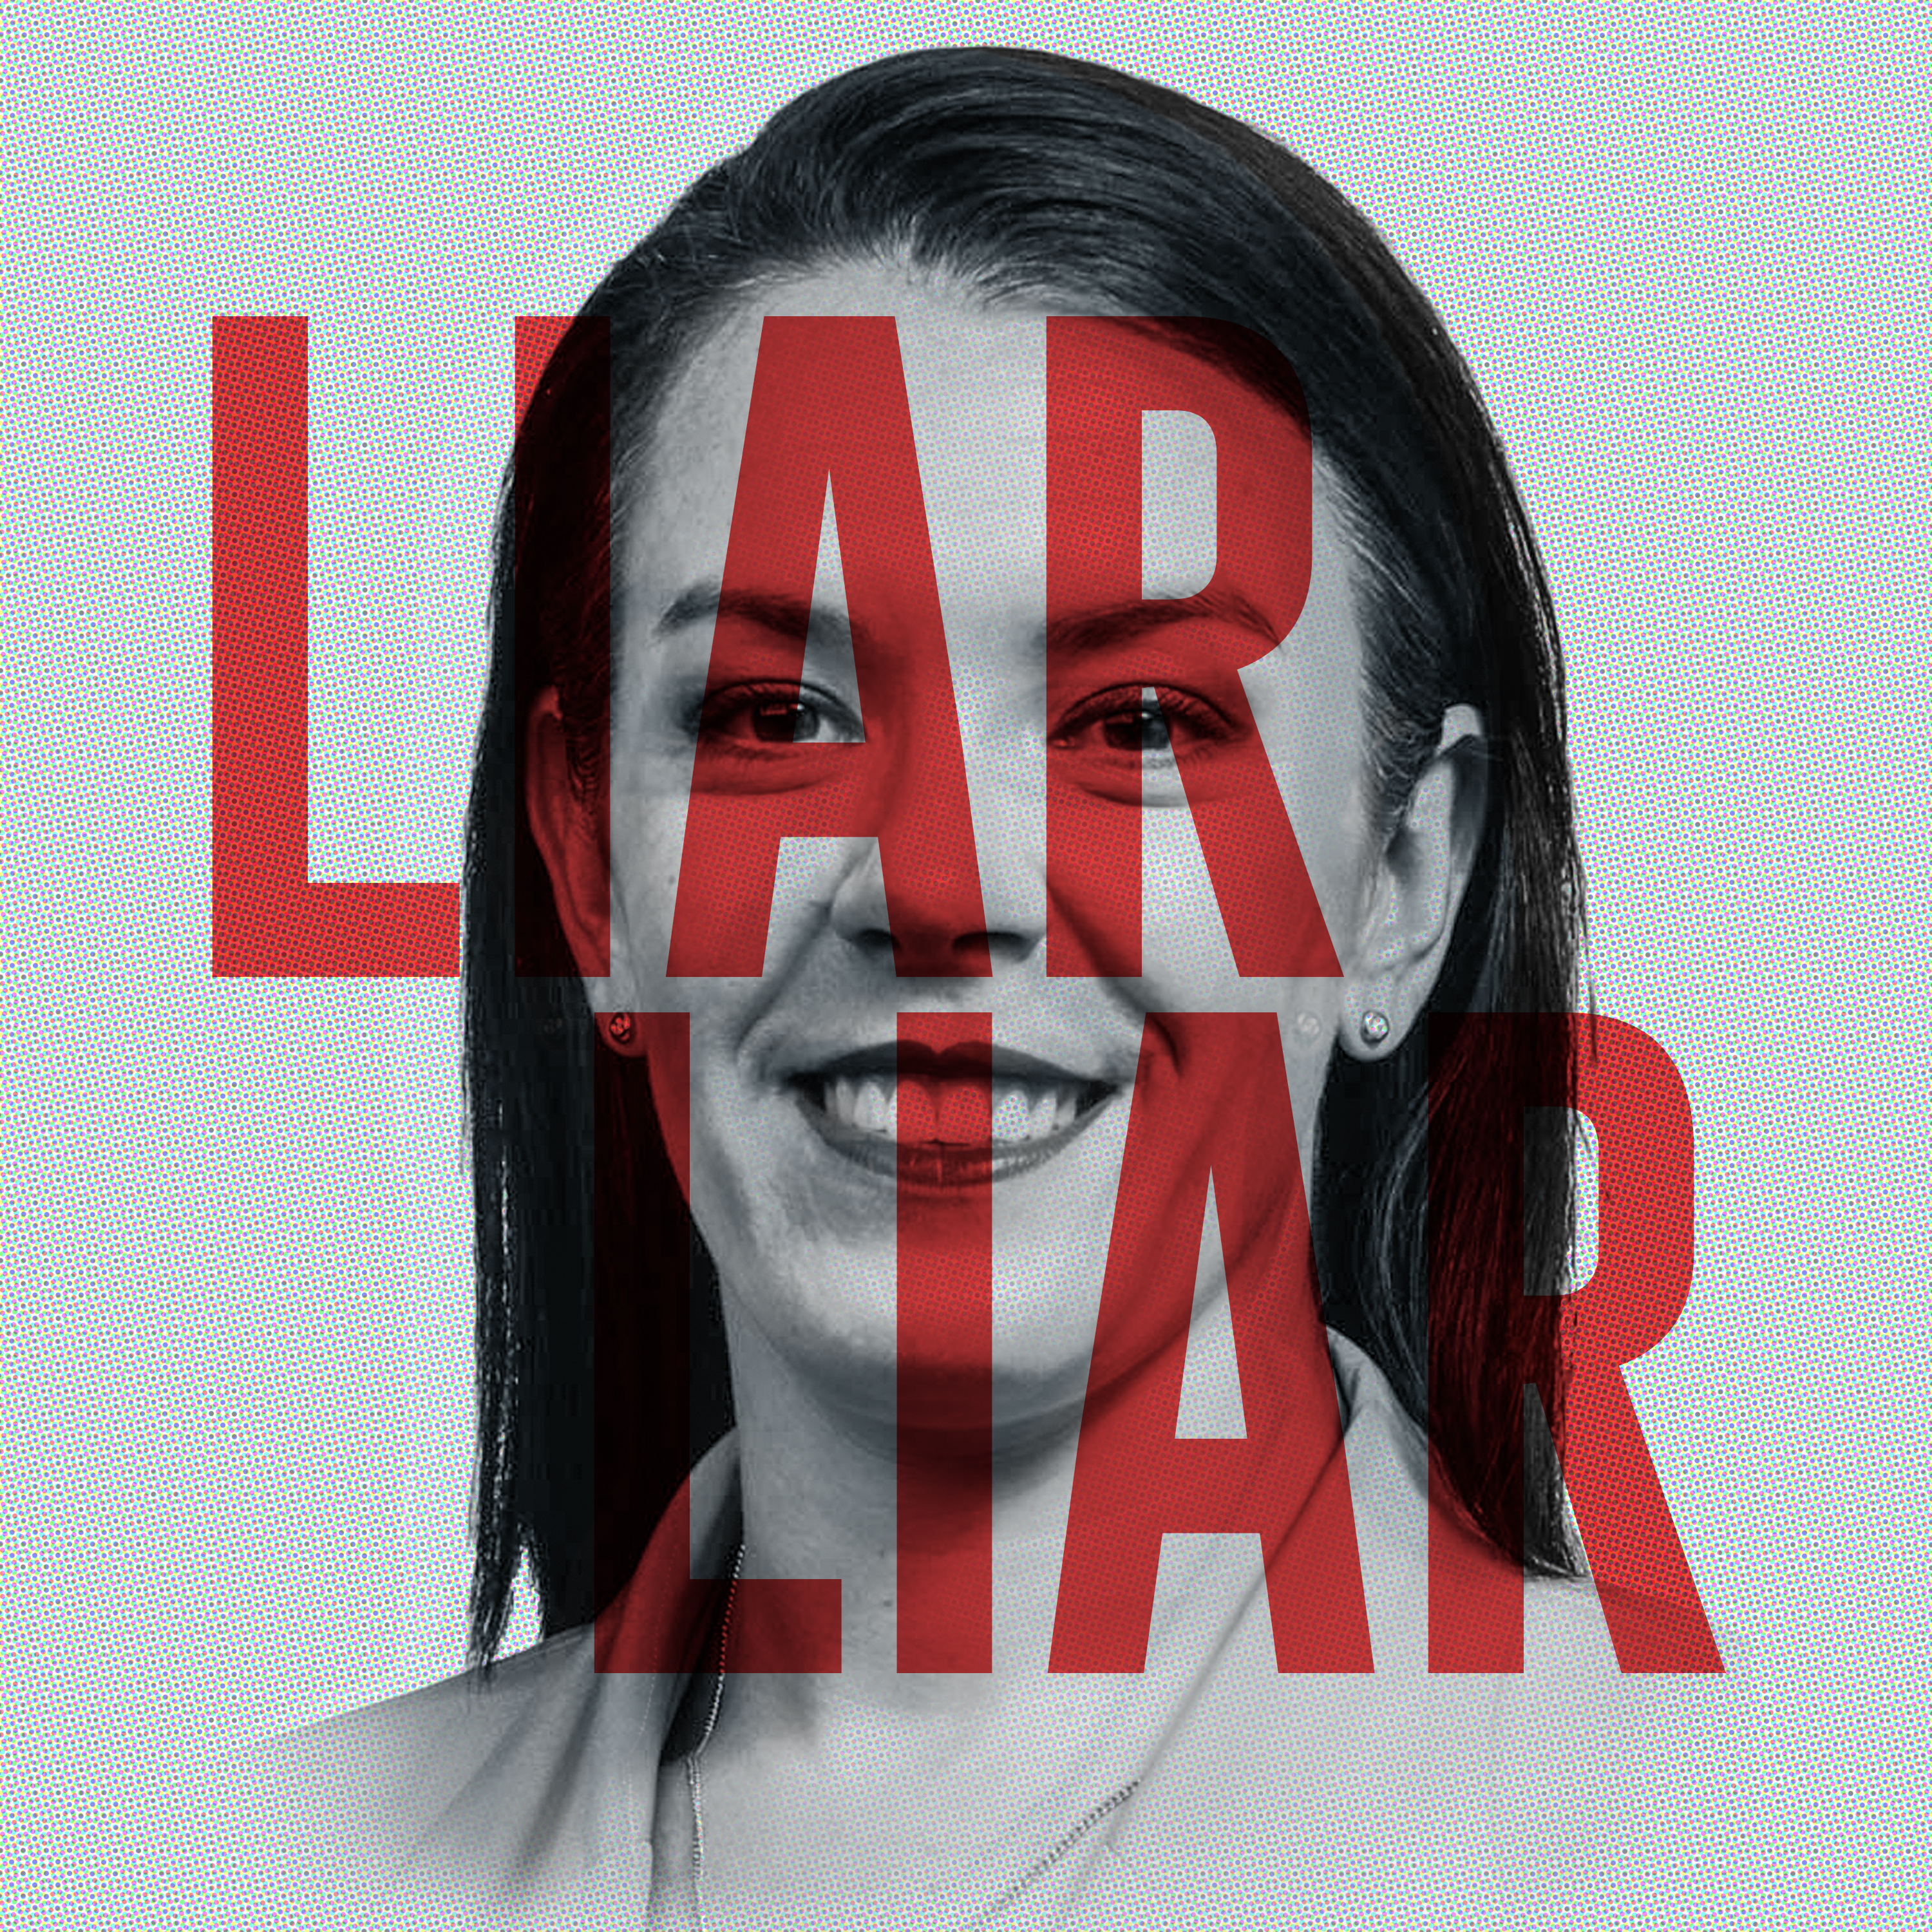 Introducing: Liar, Liar - Melissa Caddick and the Missing Millions